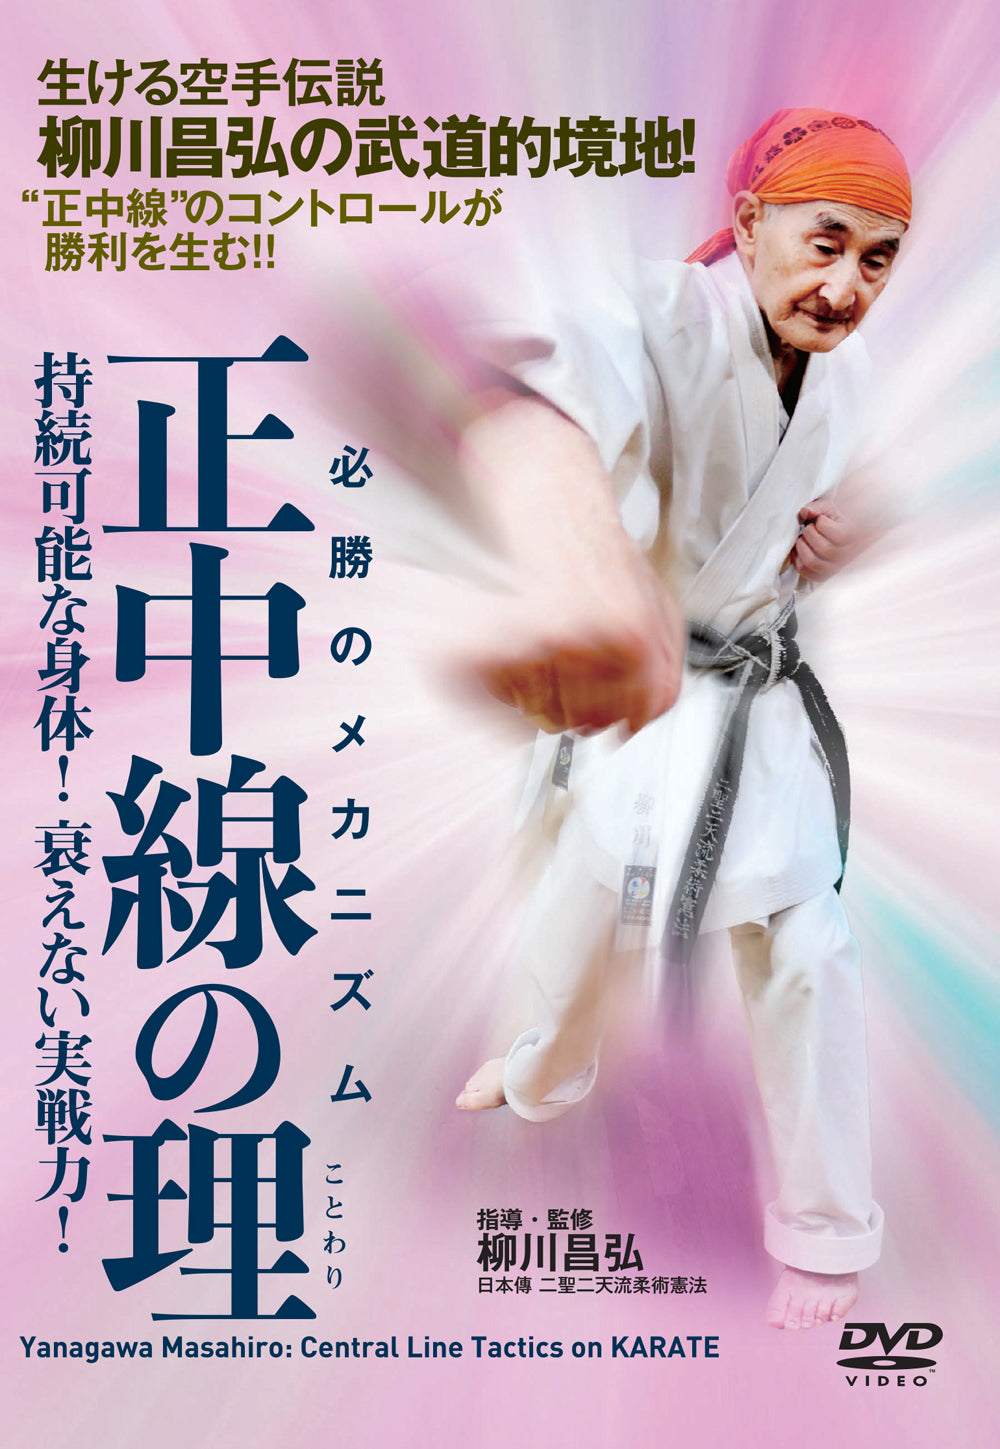 DVD de tácticas de Karate Midline de Masahiro Yanagawa